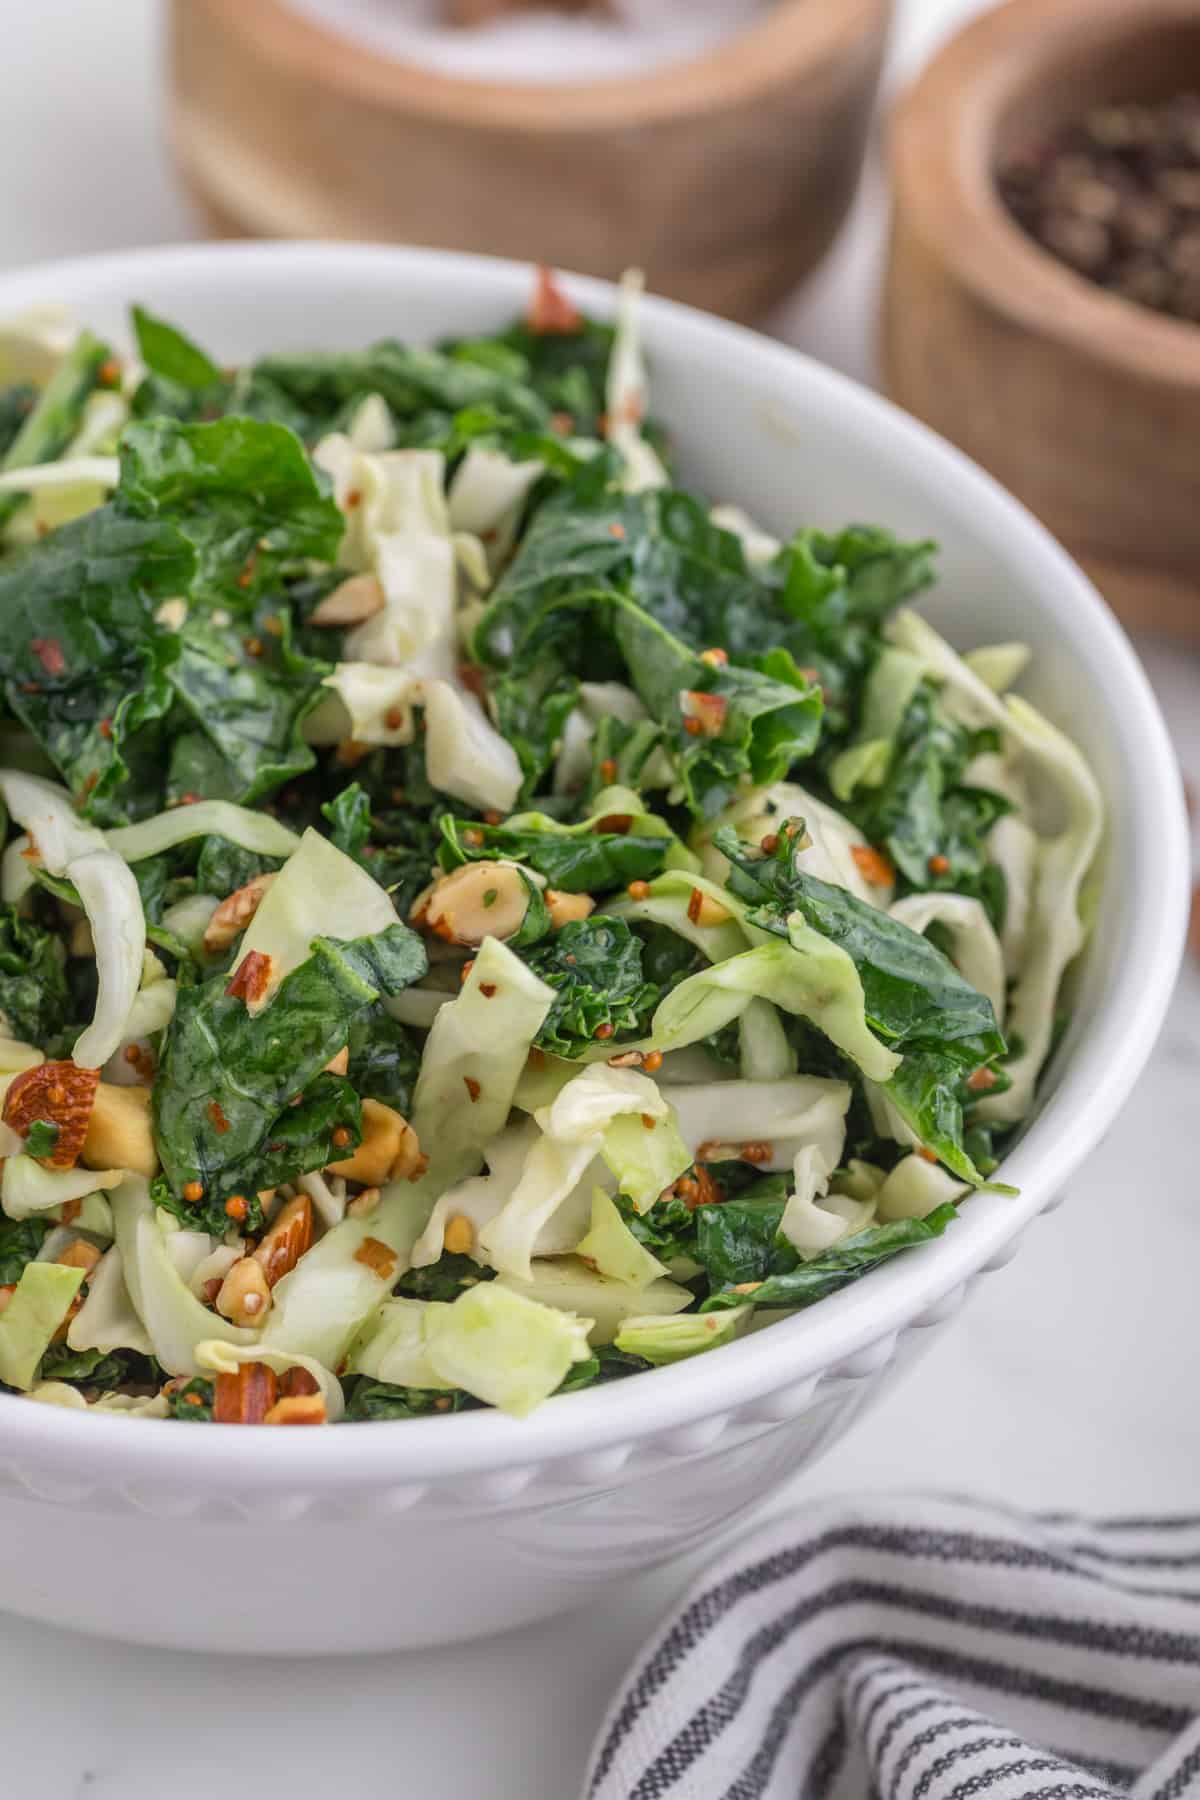 Kale crunch salad serve in a white bowl, close up.